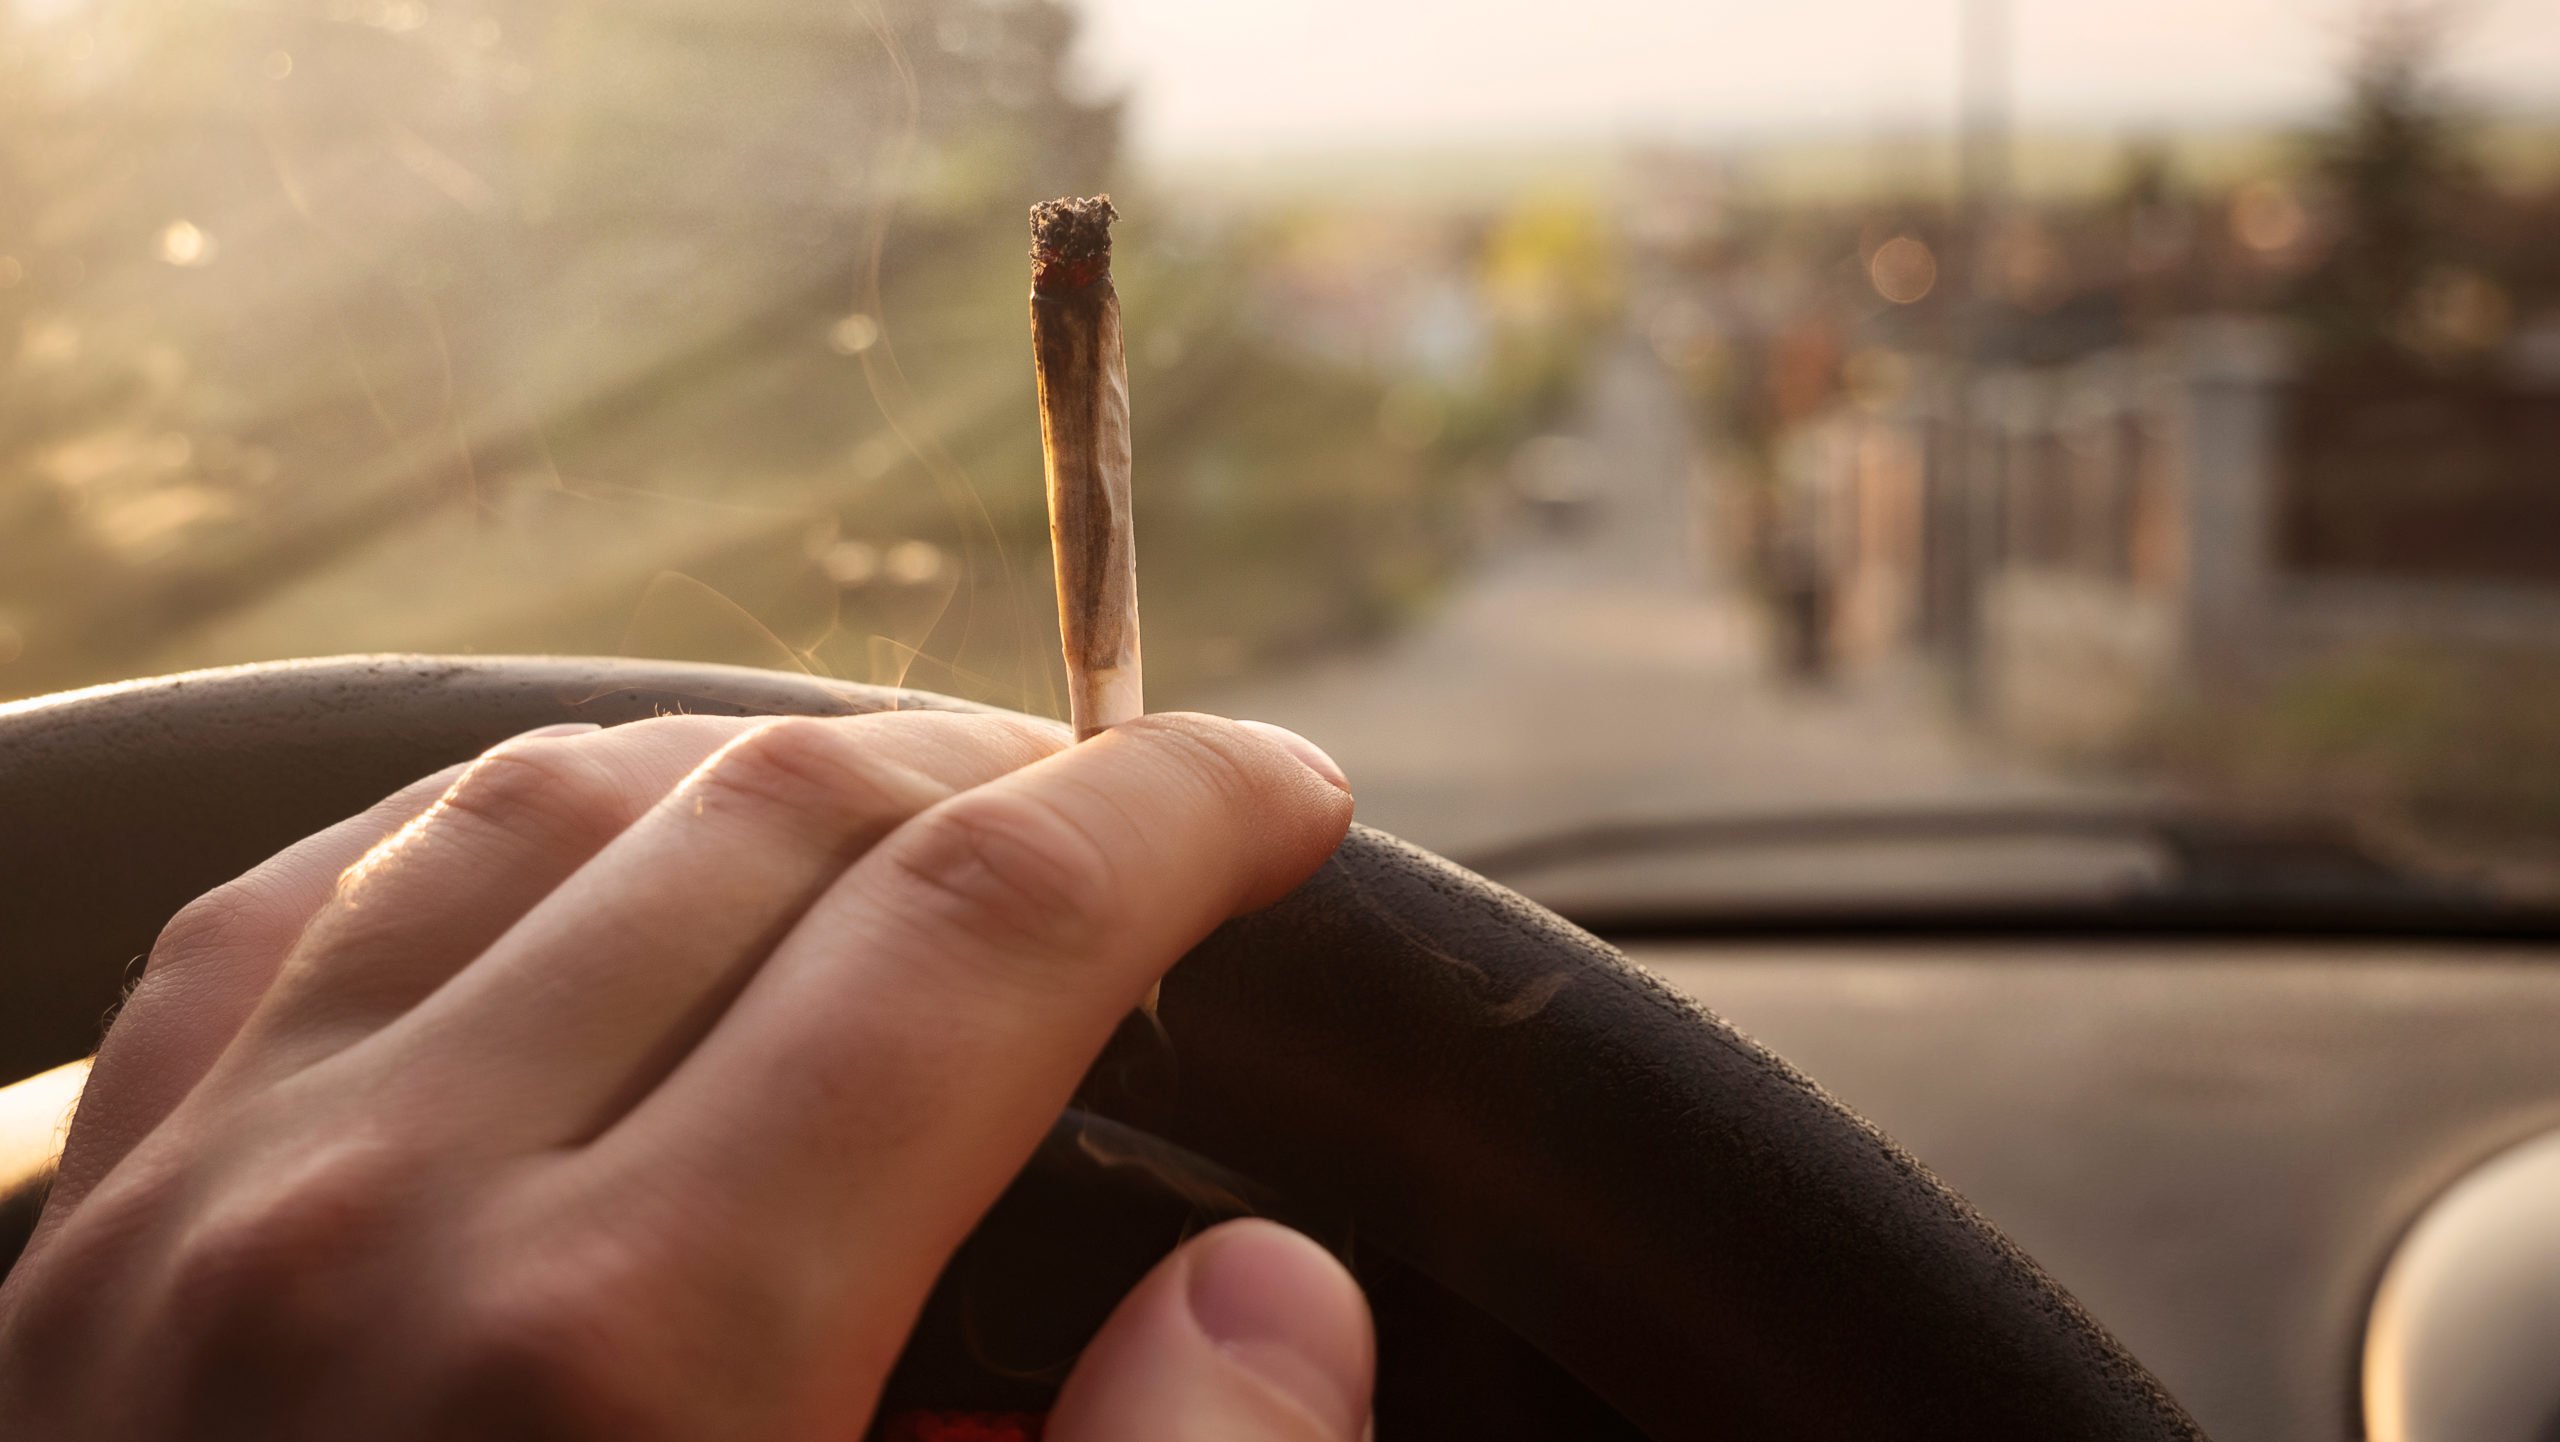 driving under the influence of marijuana